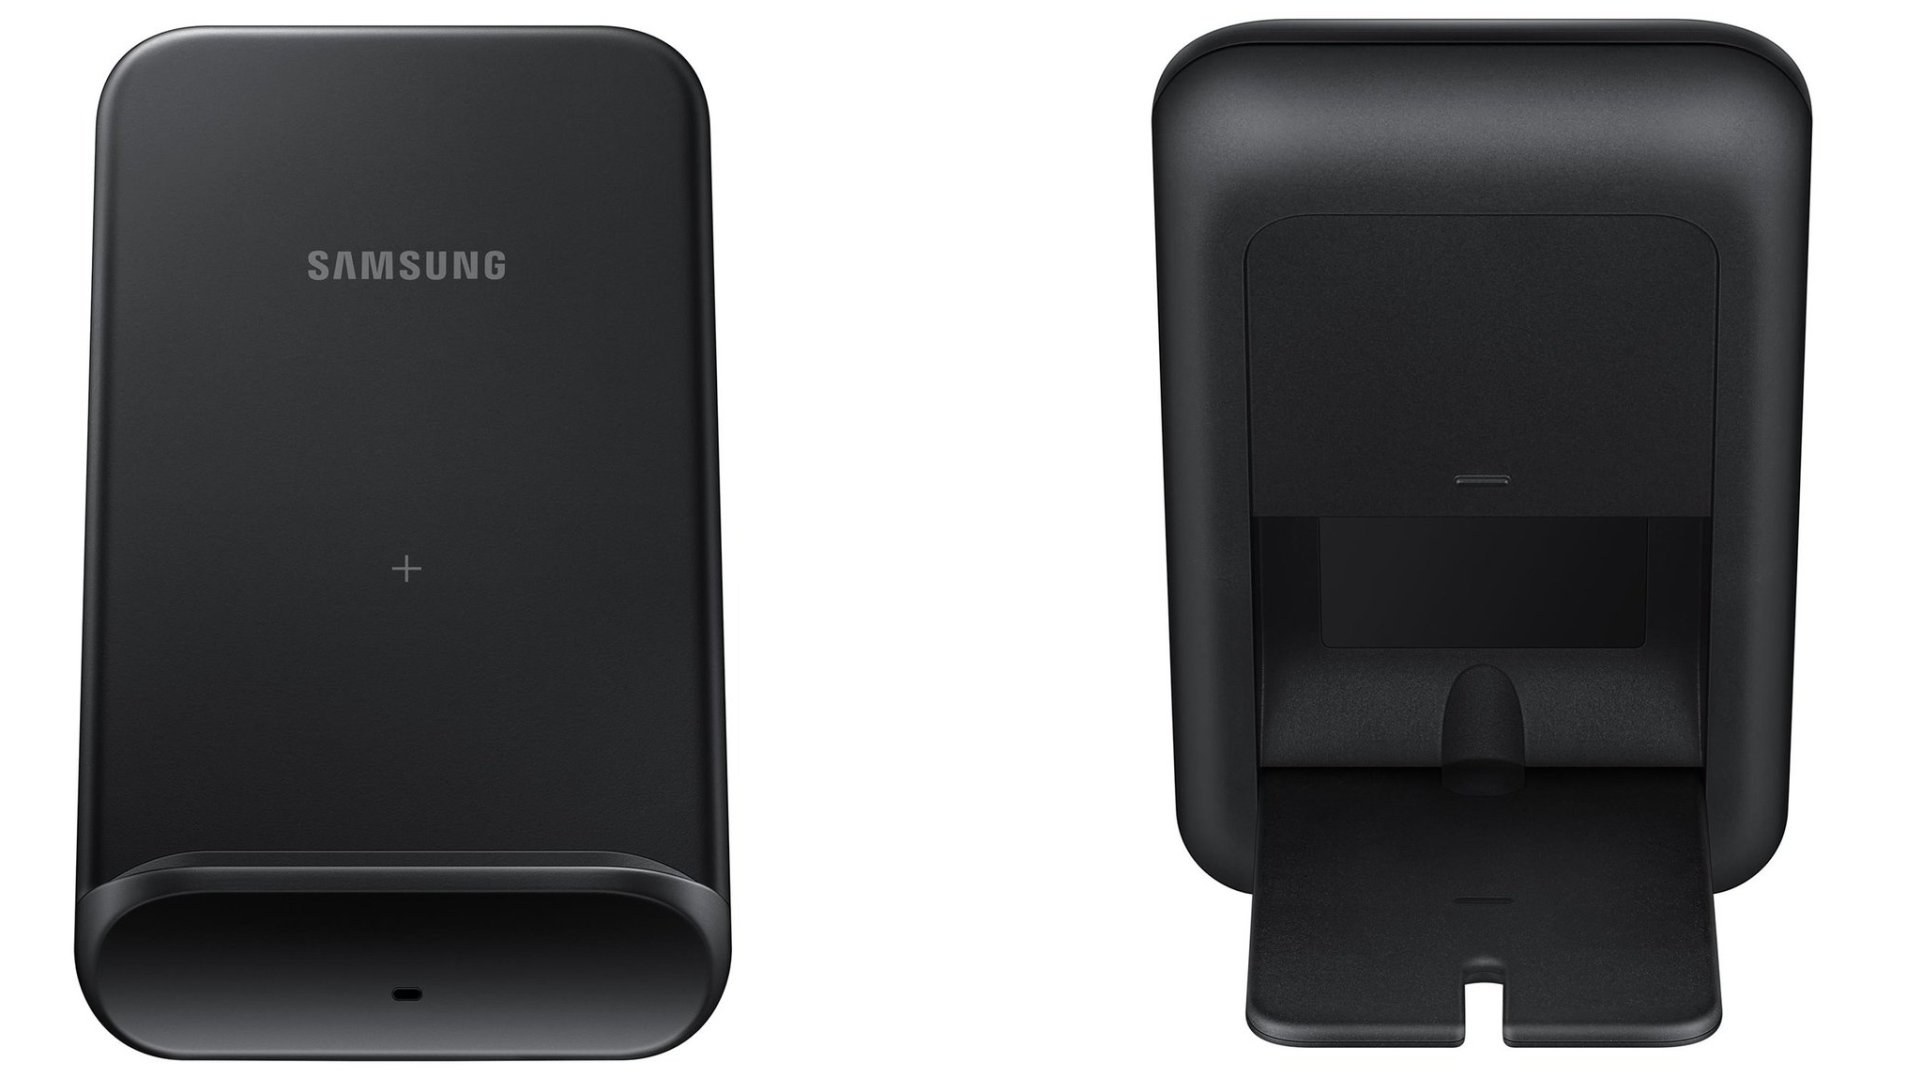 https://www.sammobile.com/wp-content/uploads/2020/08/Samsung-wireless-charger-convertible-10.jpg